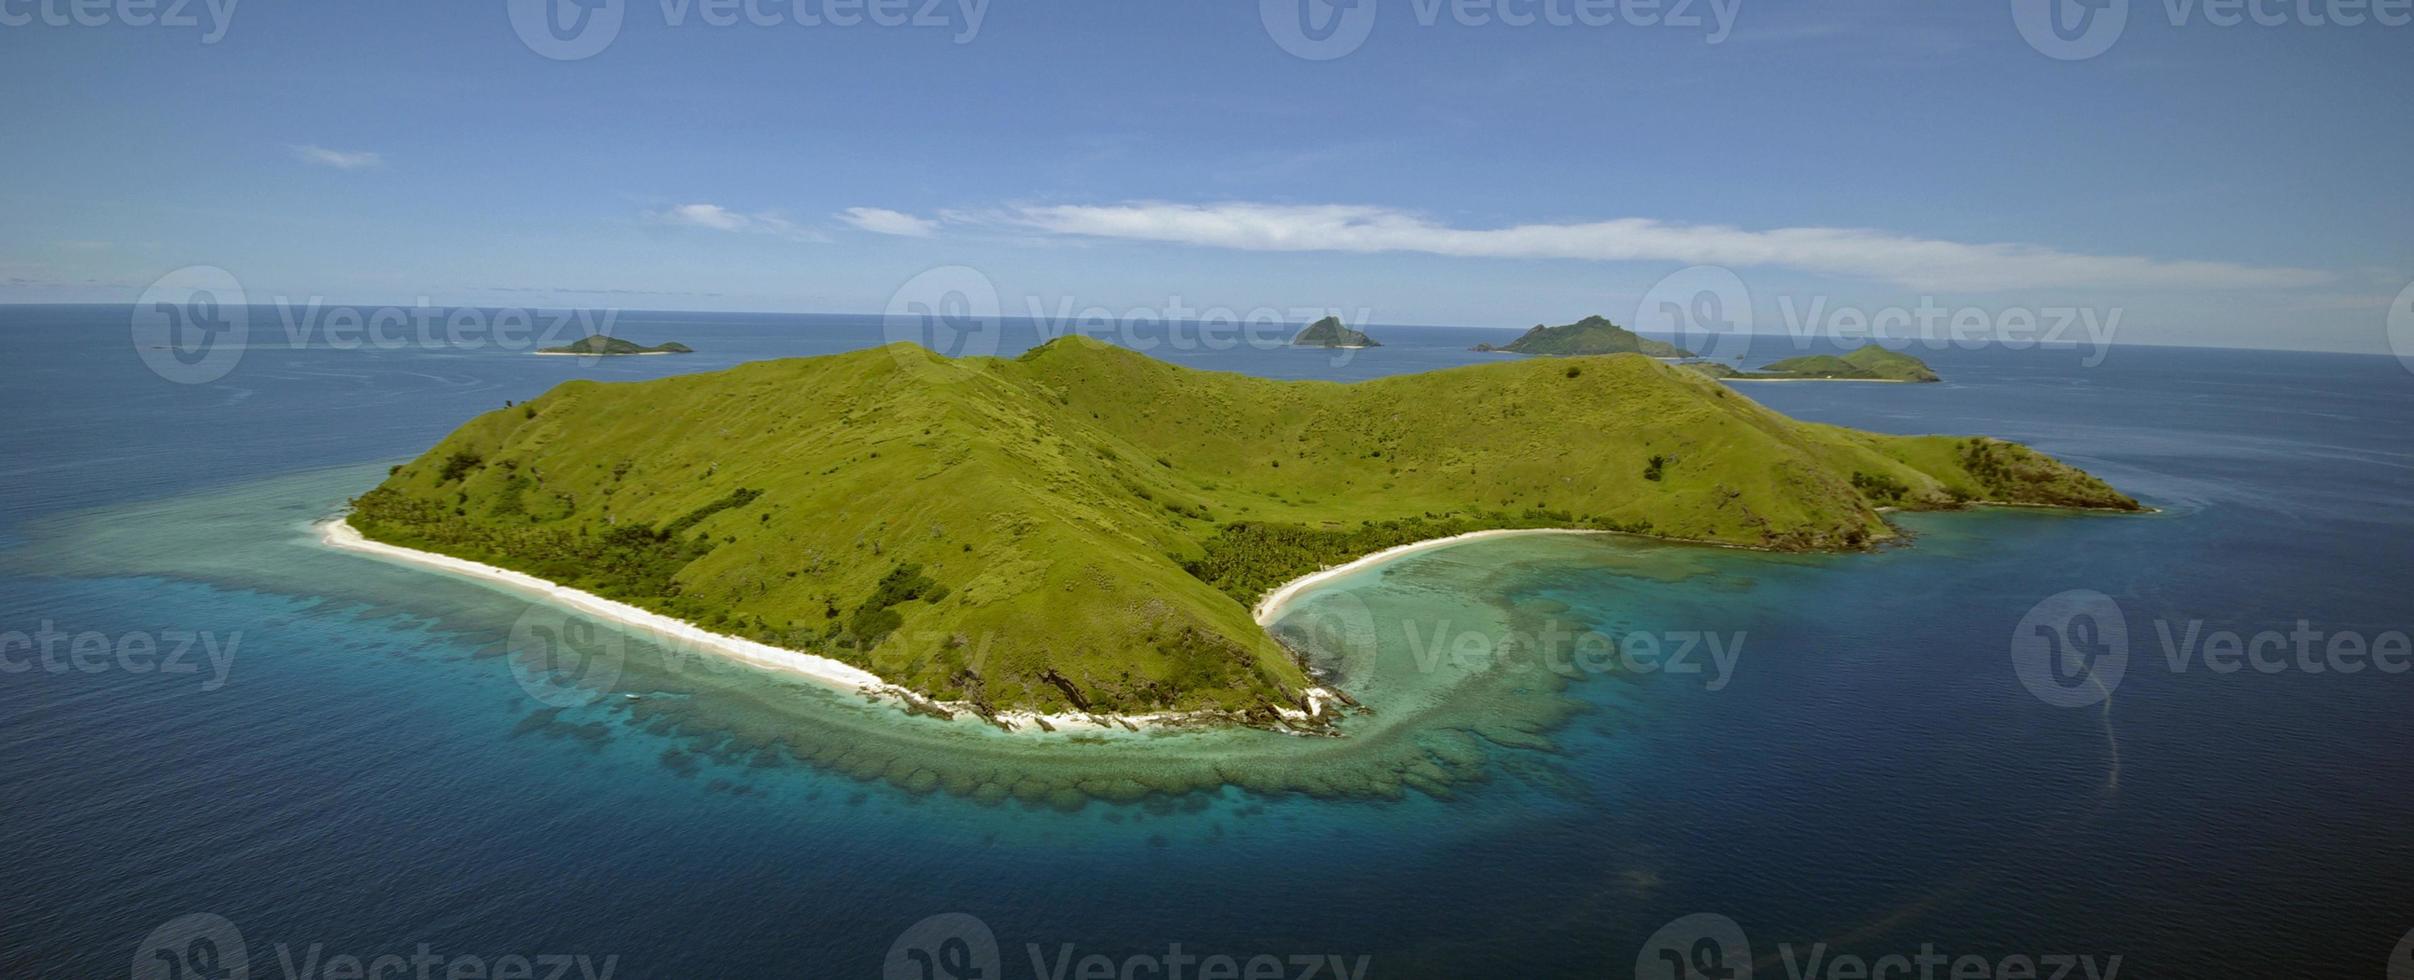 toma aerea de isla tropical foto